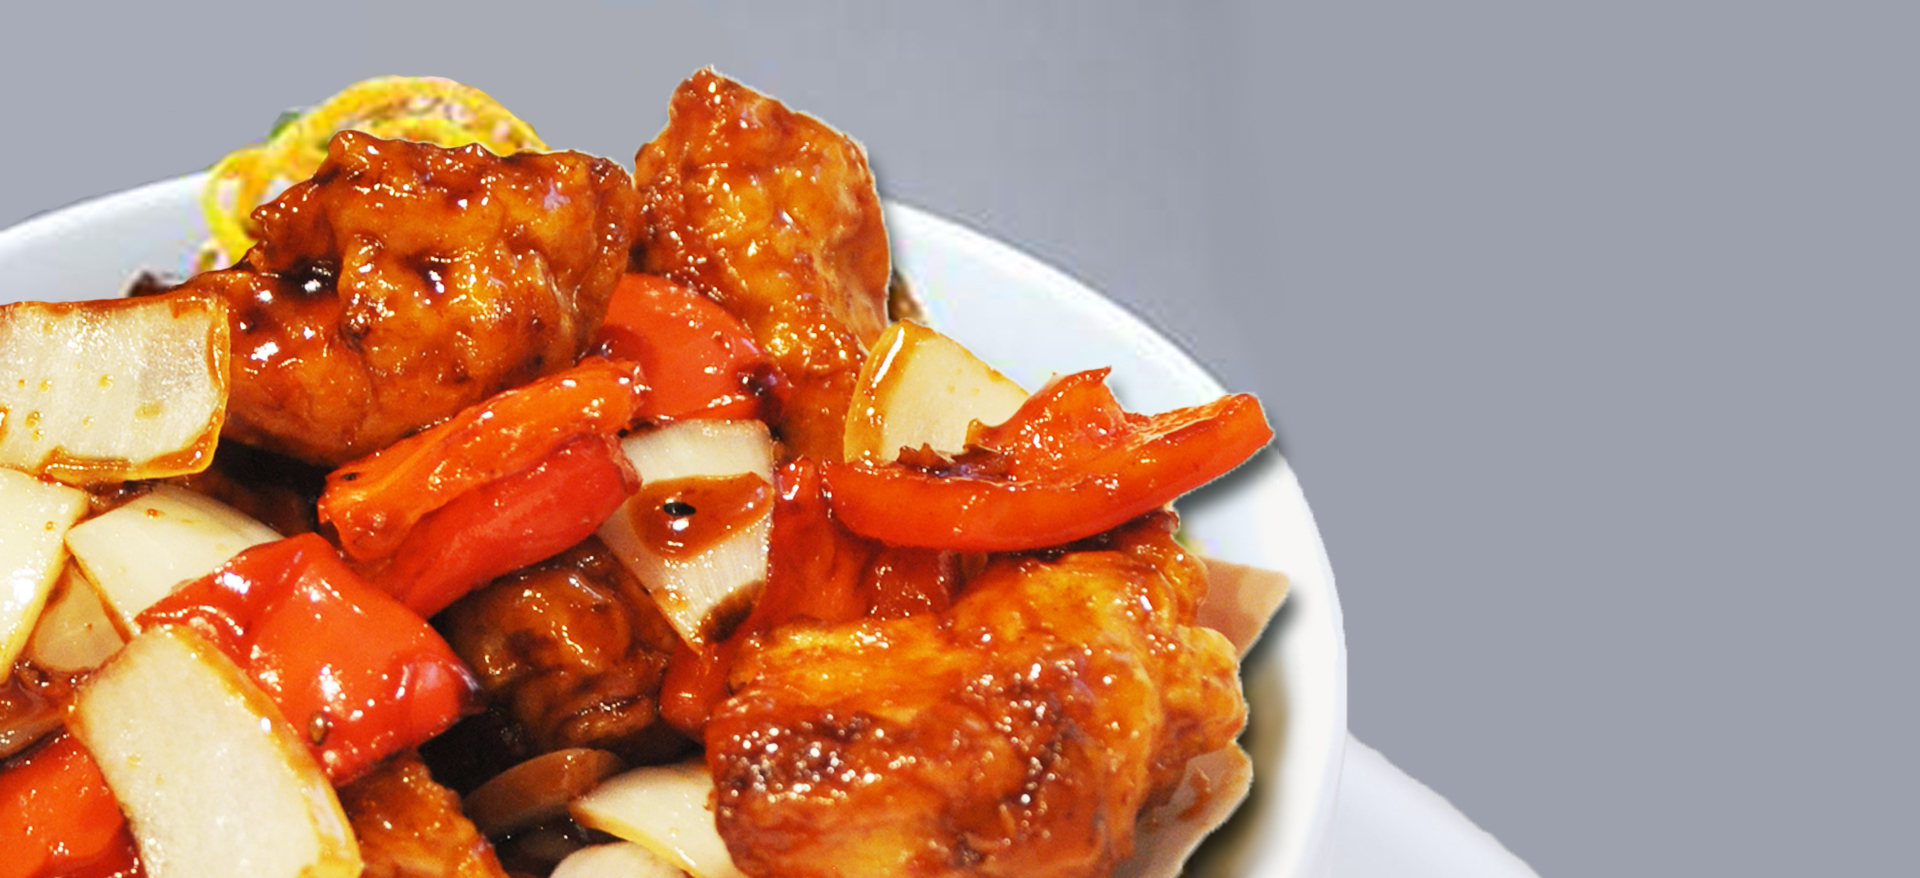 Gallery - Orange Peel Chicken - Rice & Noodle - Chinese Food - Asian Food - McKinney TX